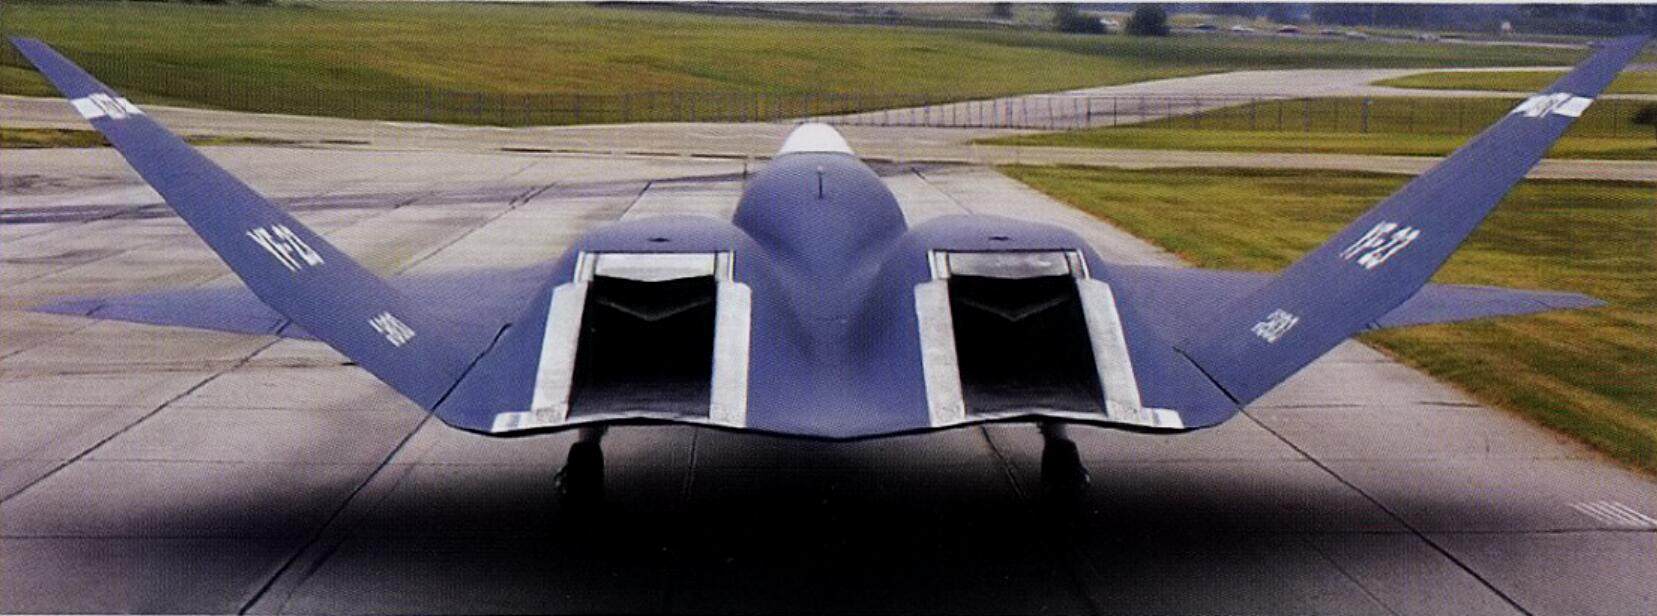 YF-23的发动机排气系统类似B-2的设计，发动机喷嘴位于机尾上方，喷嘴离机尾末端还有一段固定式排气槽。